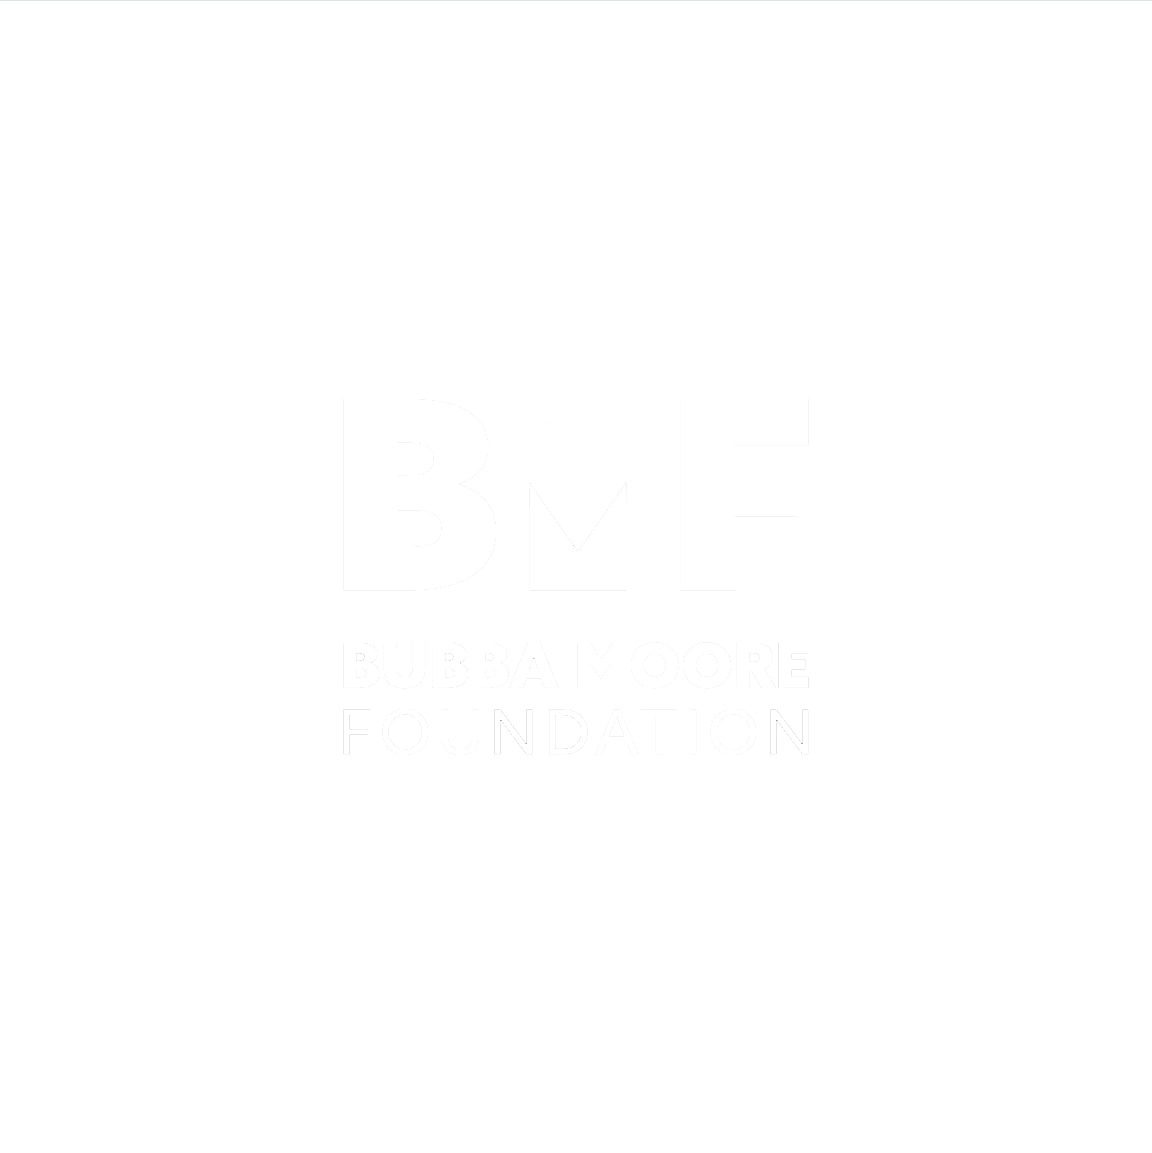 Bubba Moore Foundation